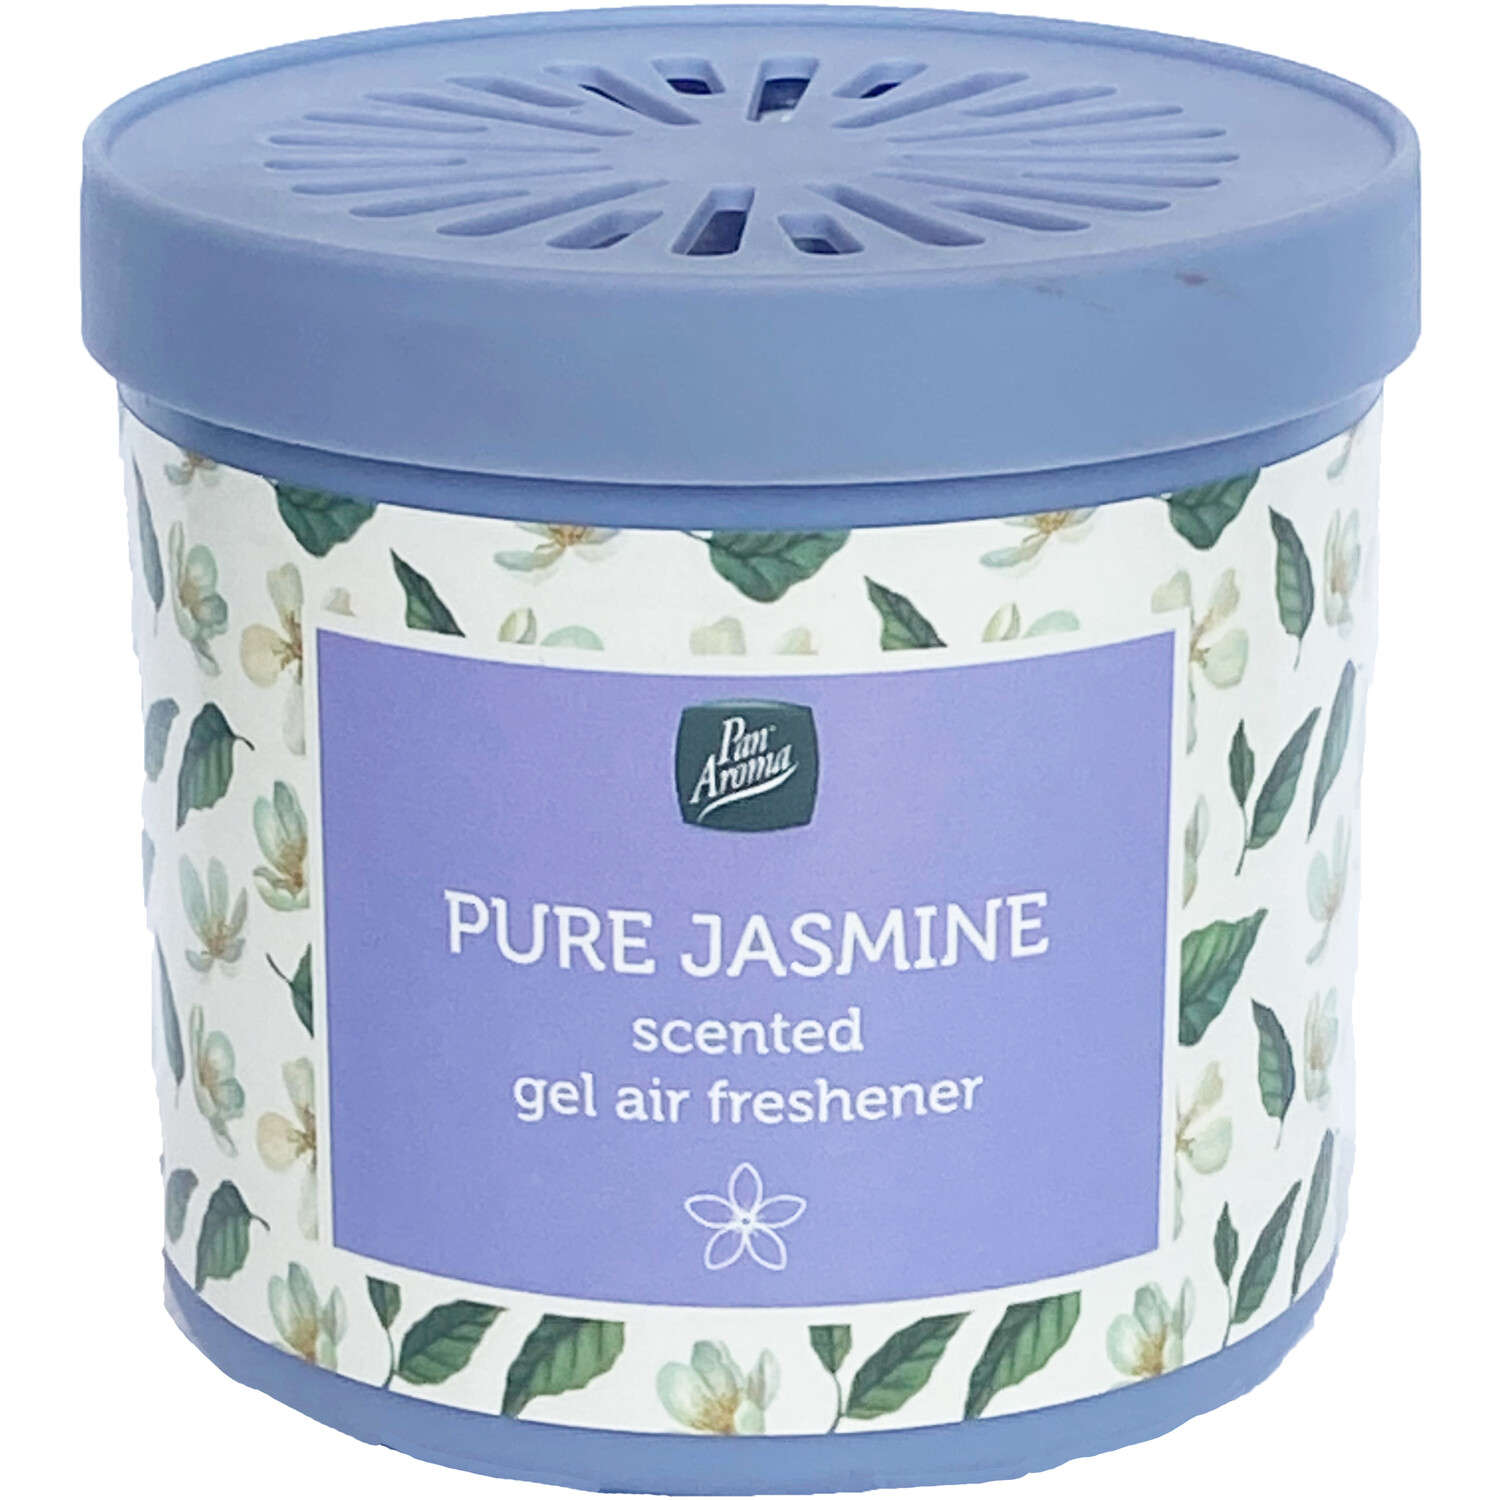 Pan Aroma Gel Air Freshener - Pure Jasmine Image 1